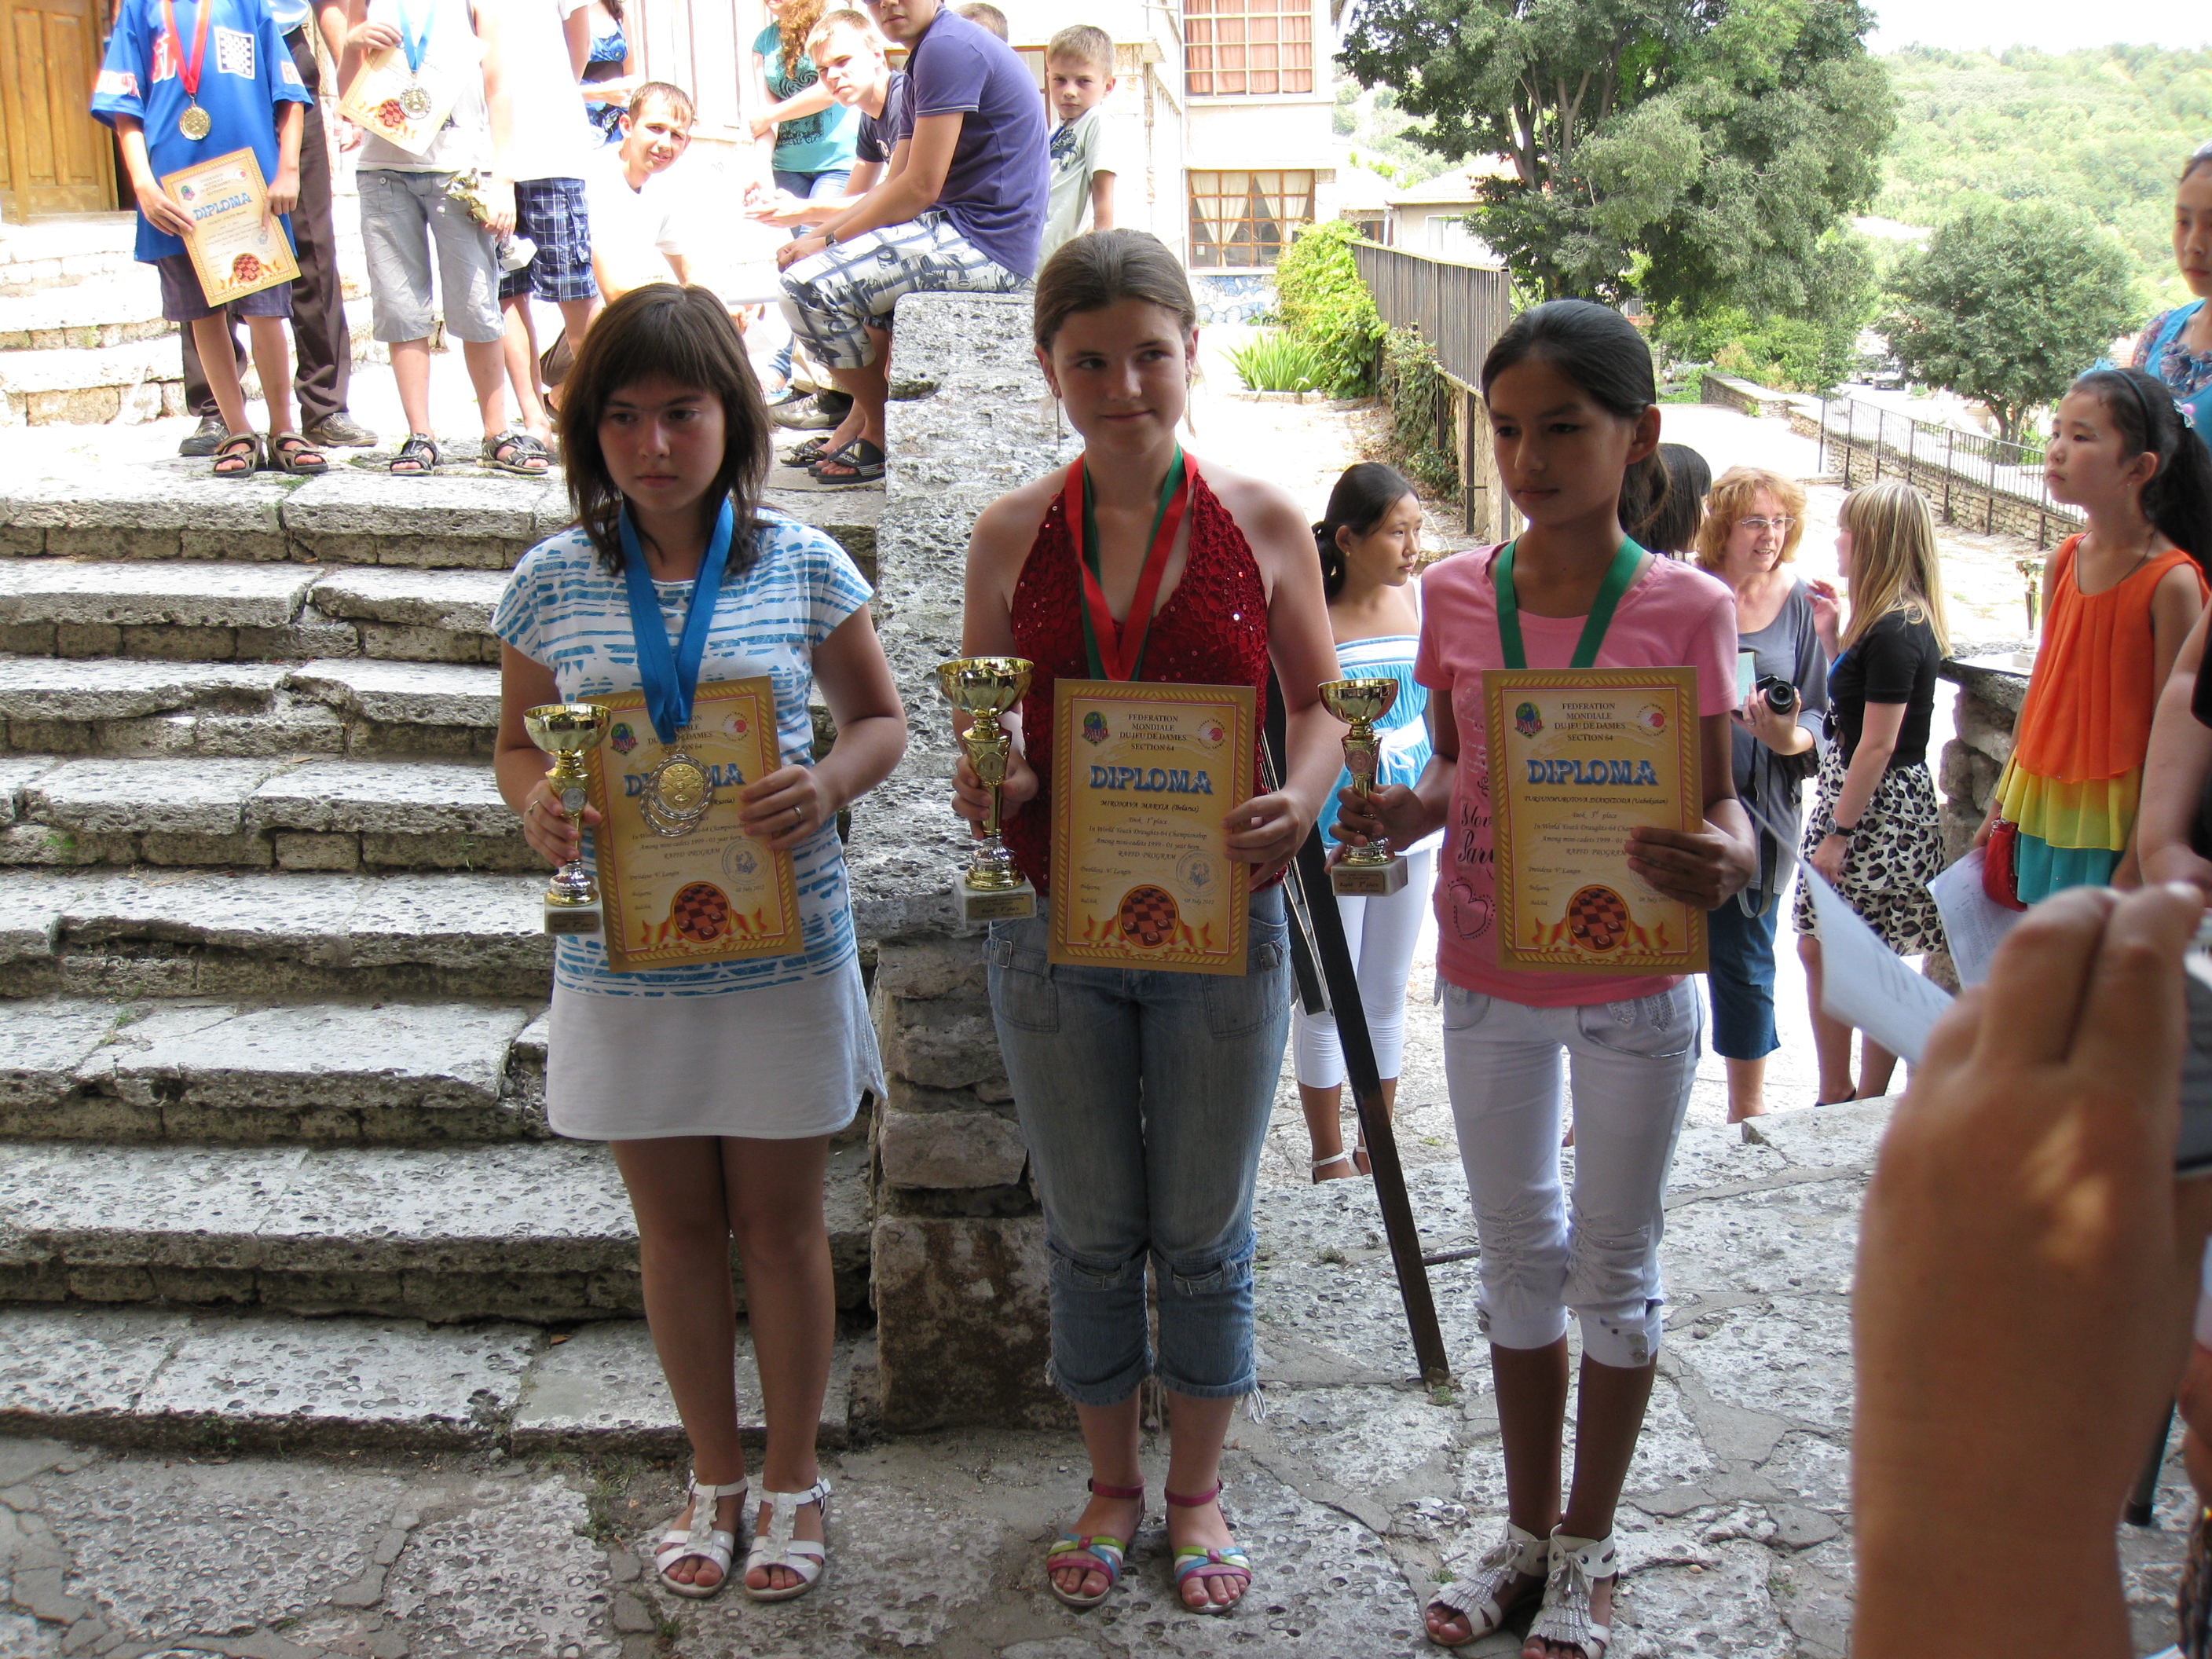        -   - World Youth Championship in Balchik, Bulgaria 6-15.07.2012 - IMG_3049 - IMG_3049.JPG